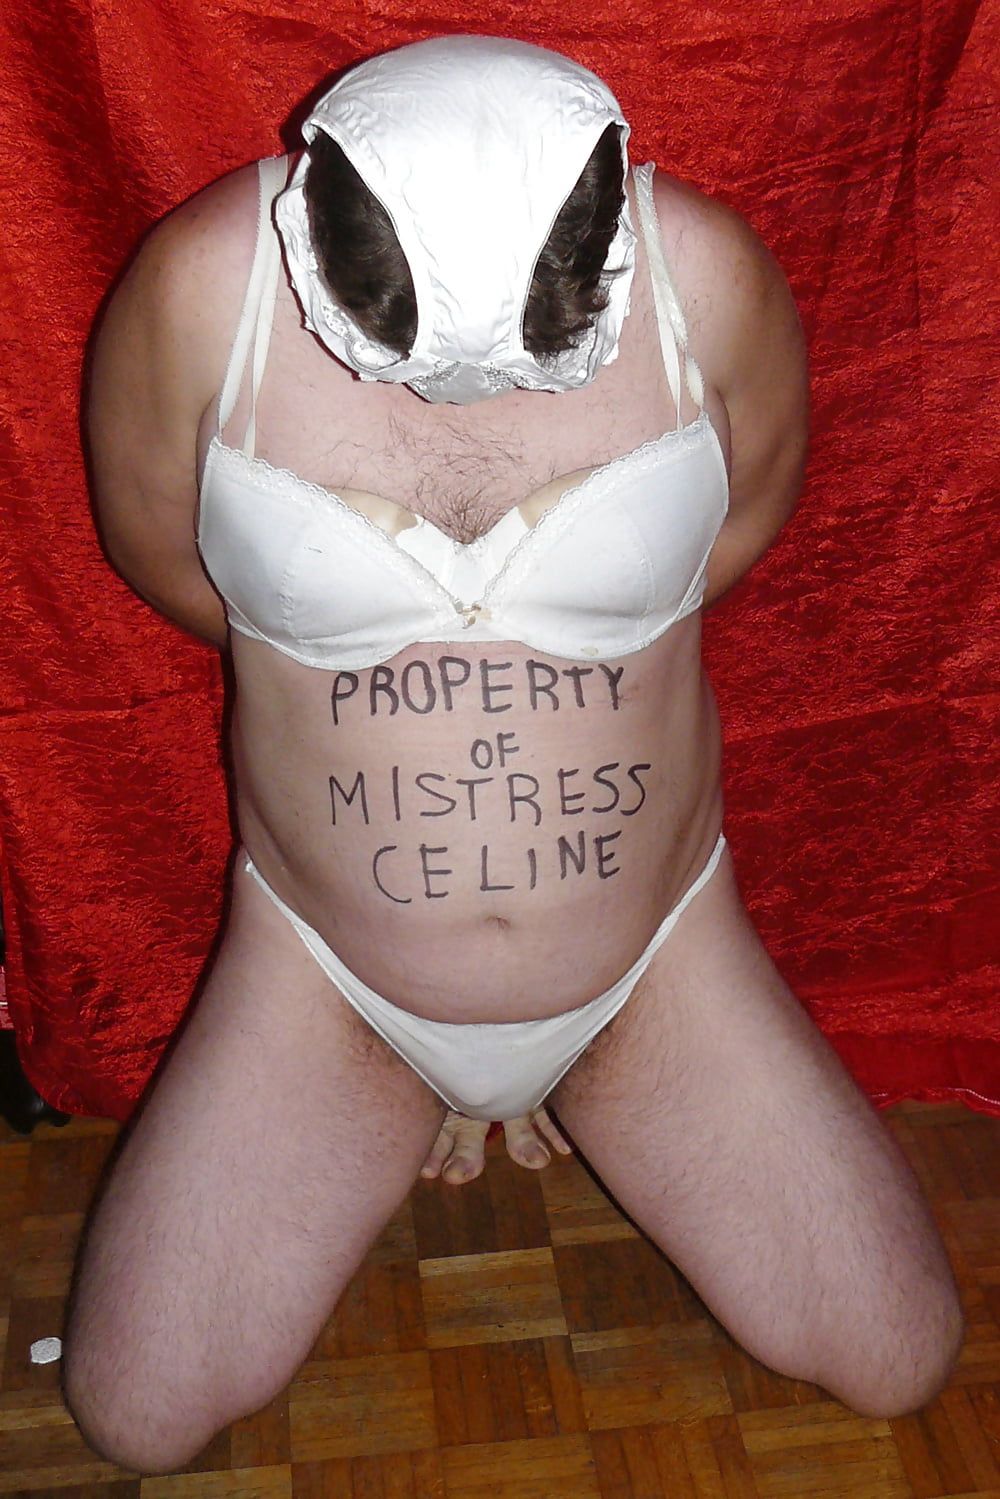 My Mistress Celine allows you to cum! #2